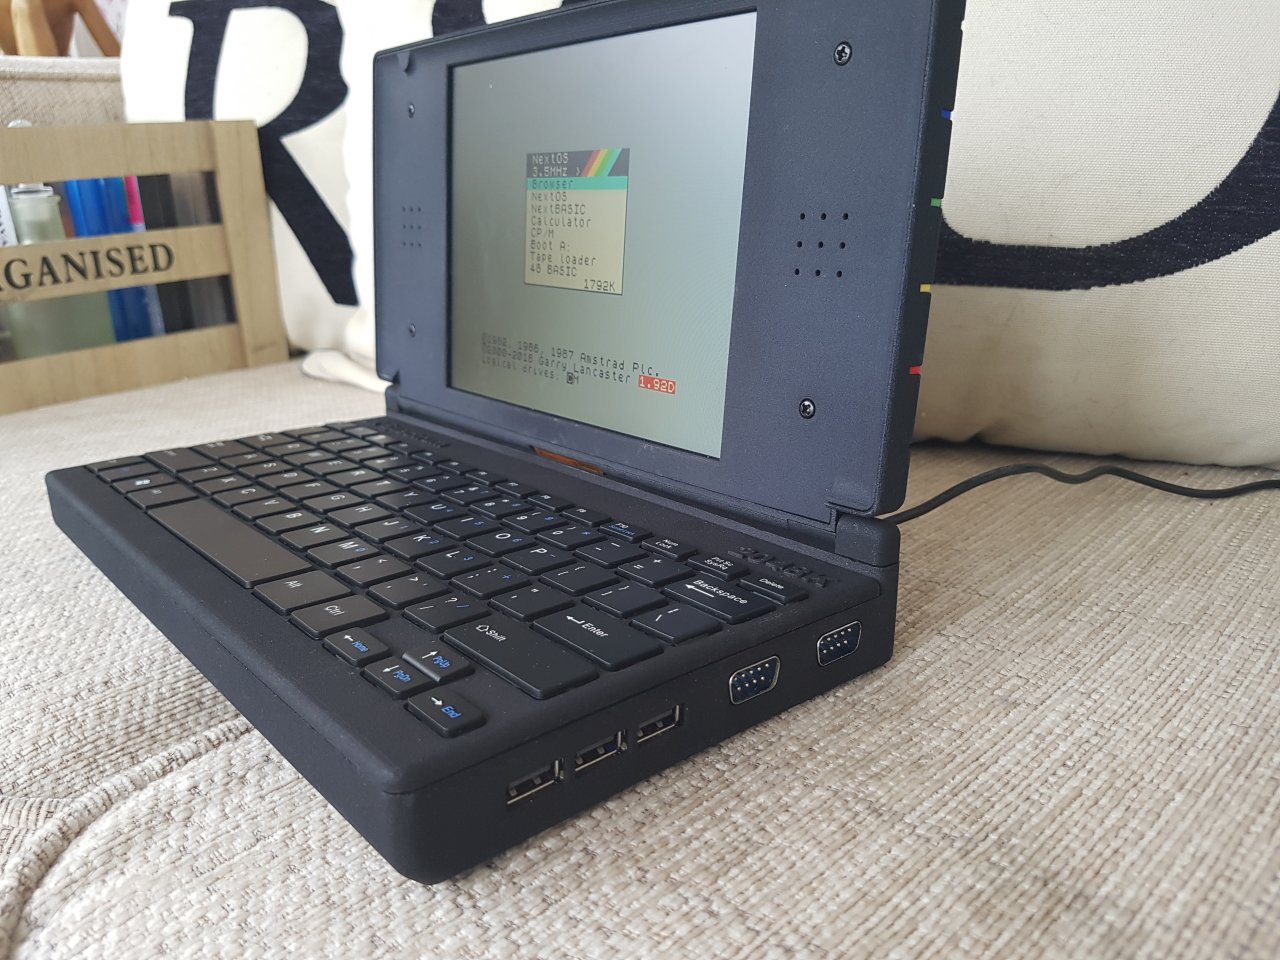 ZX Spectrum Next Laptop Finished